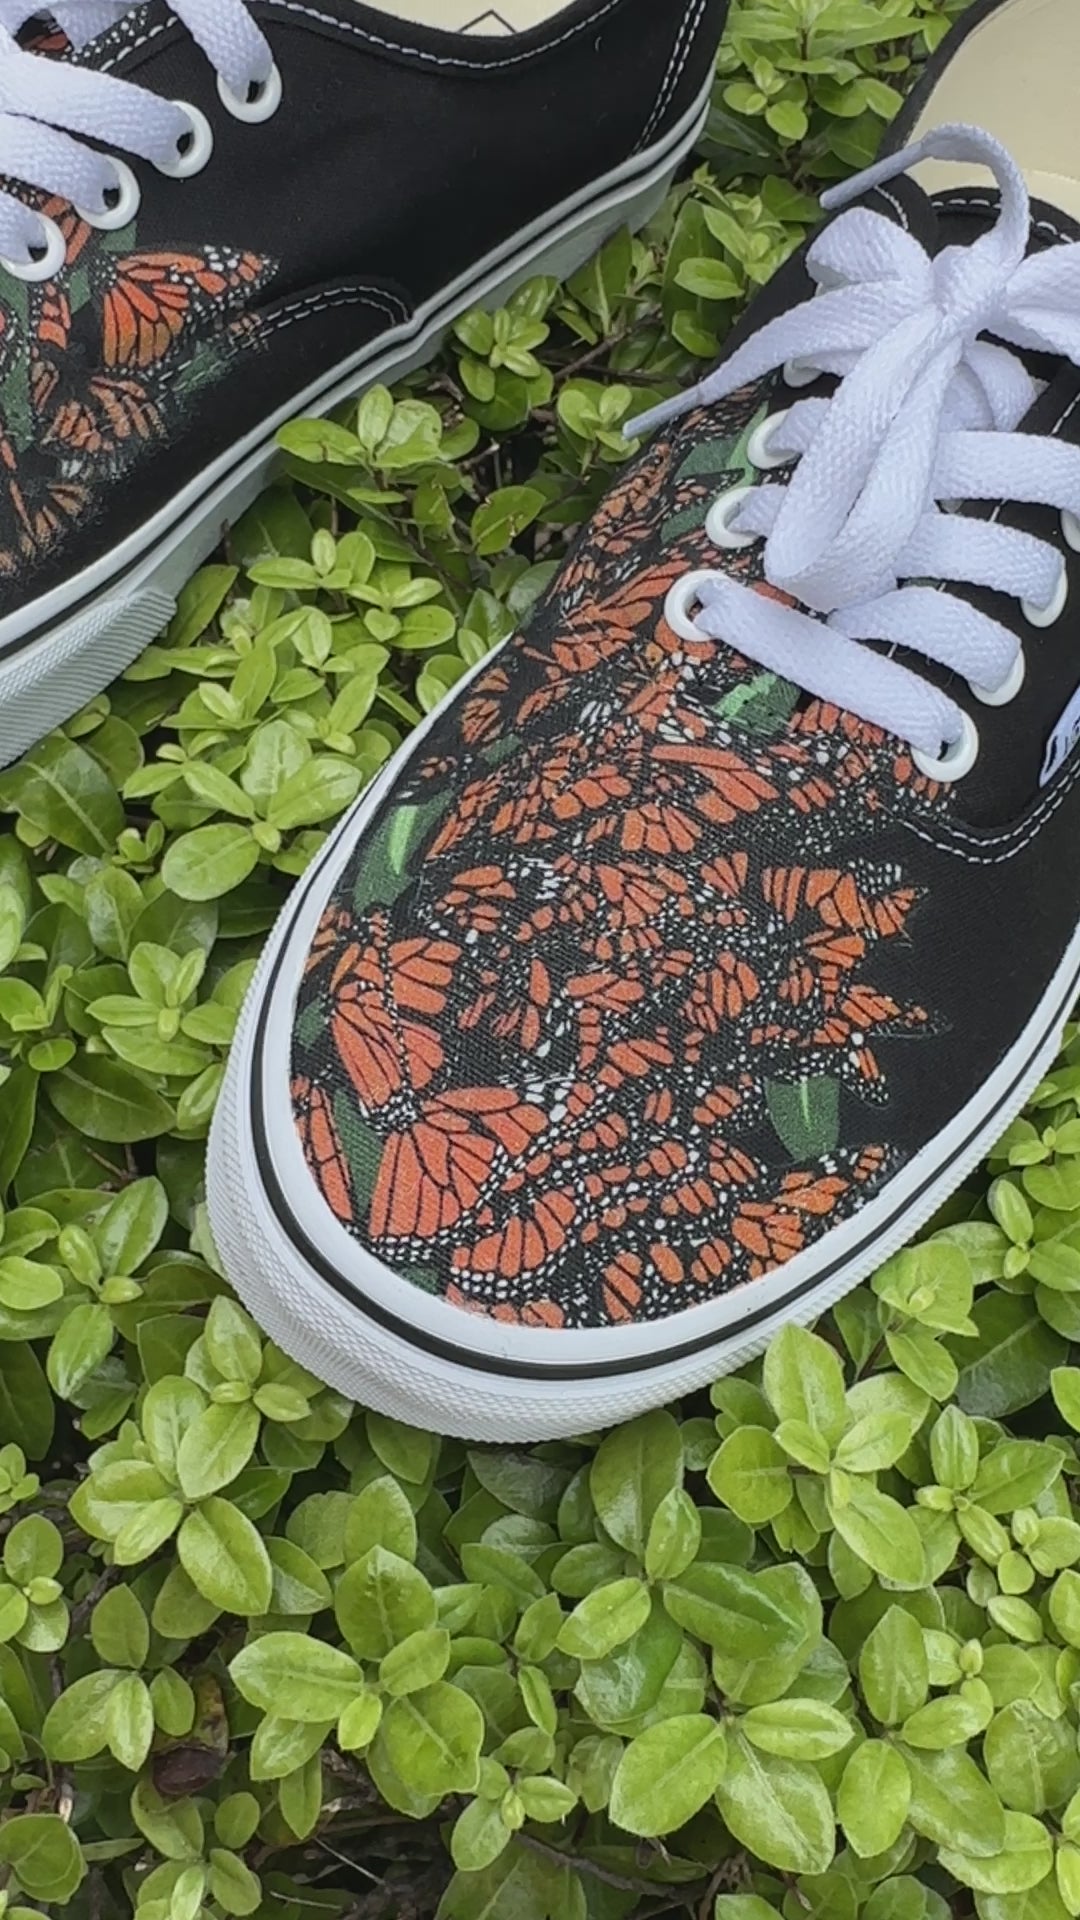 painted vans shoes